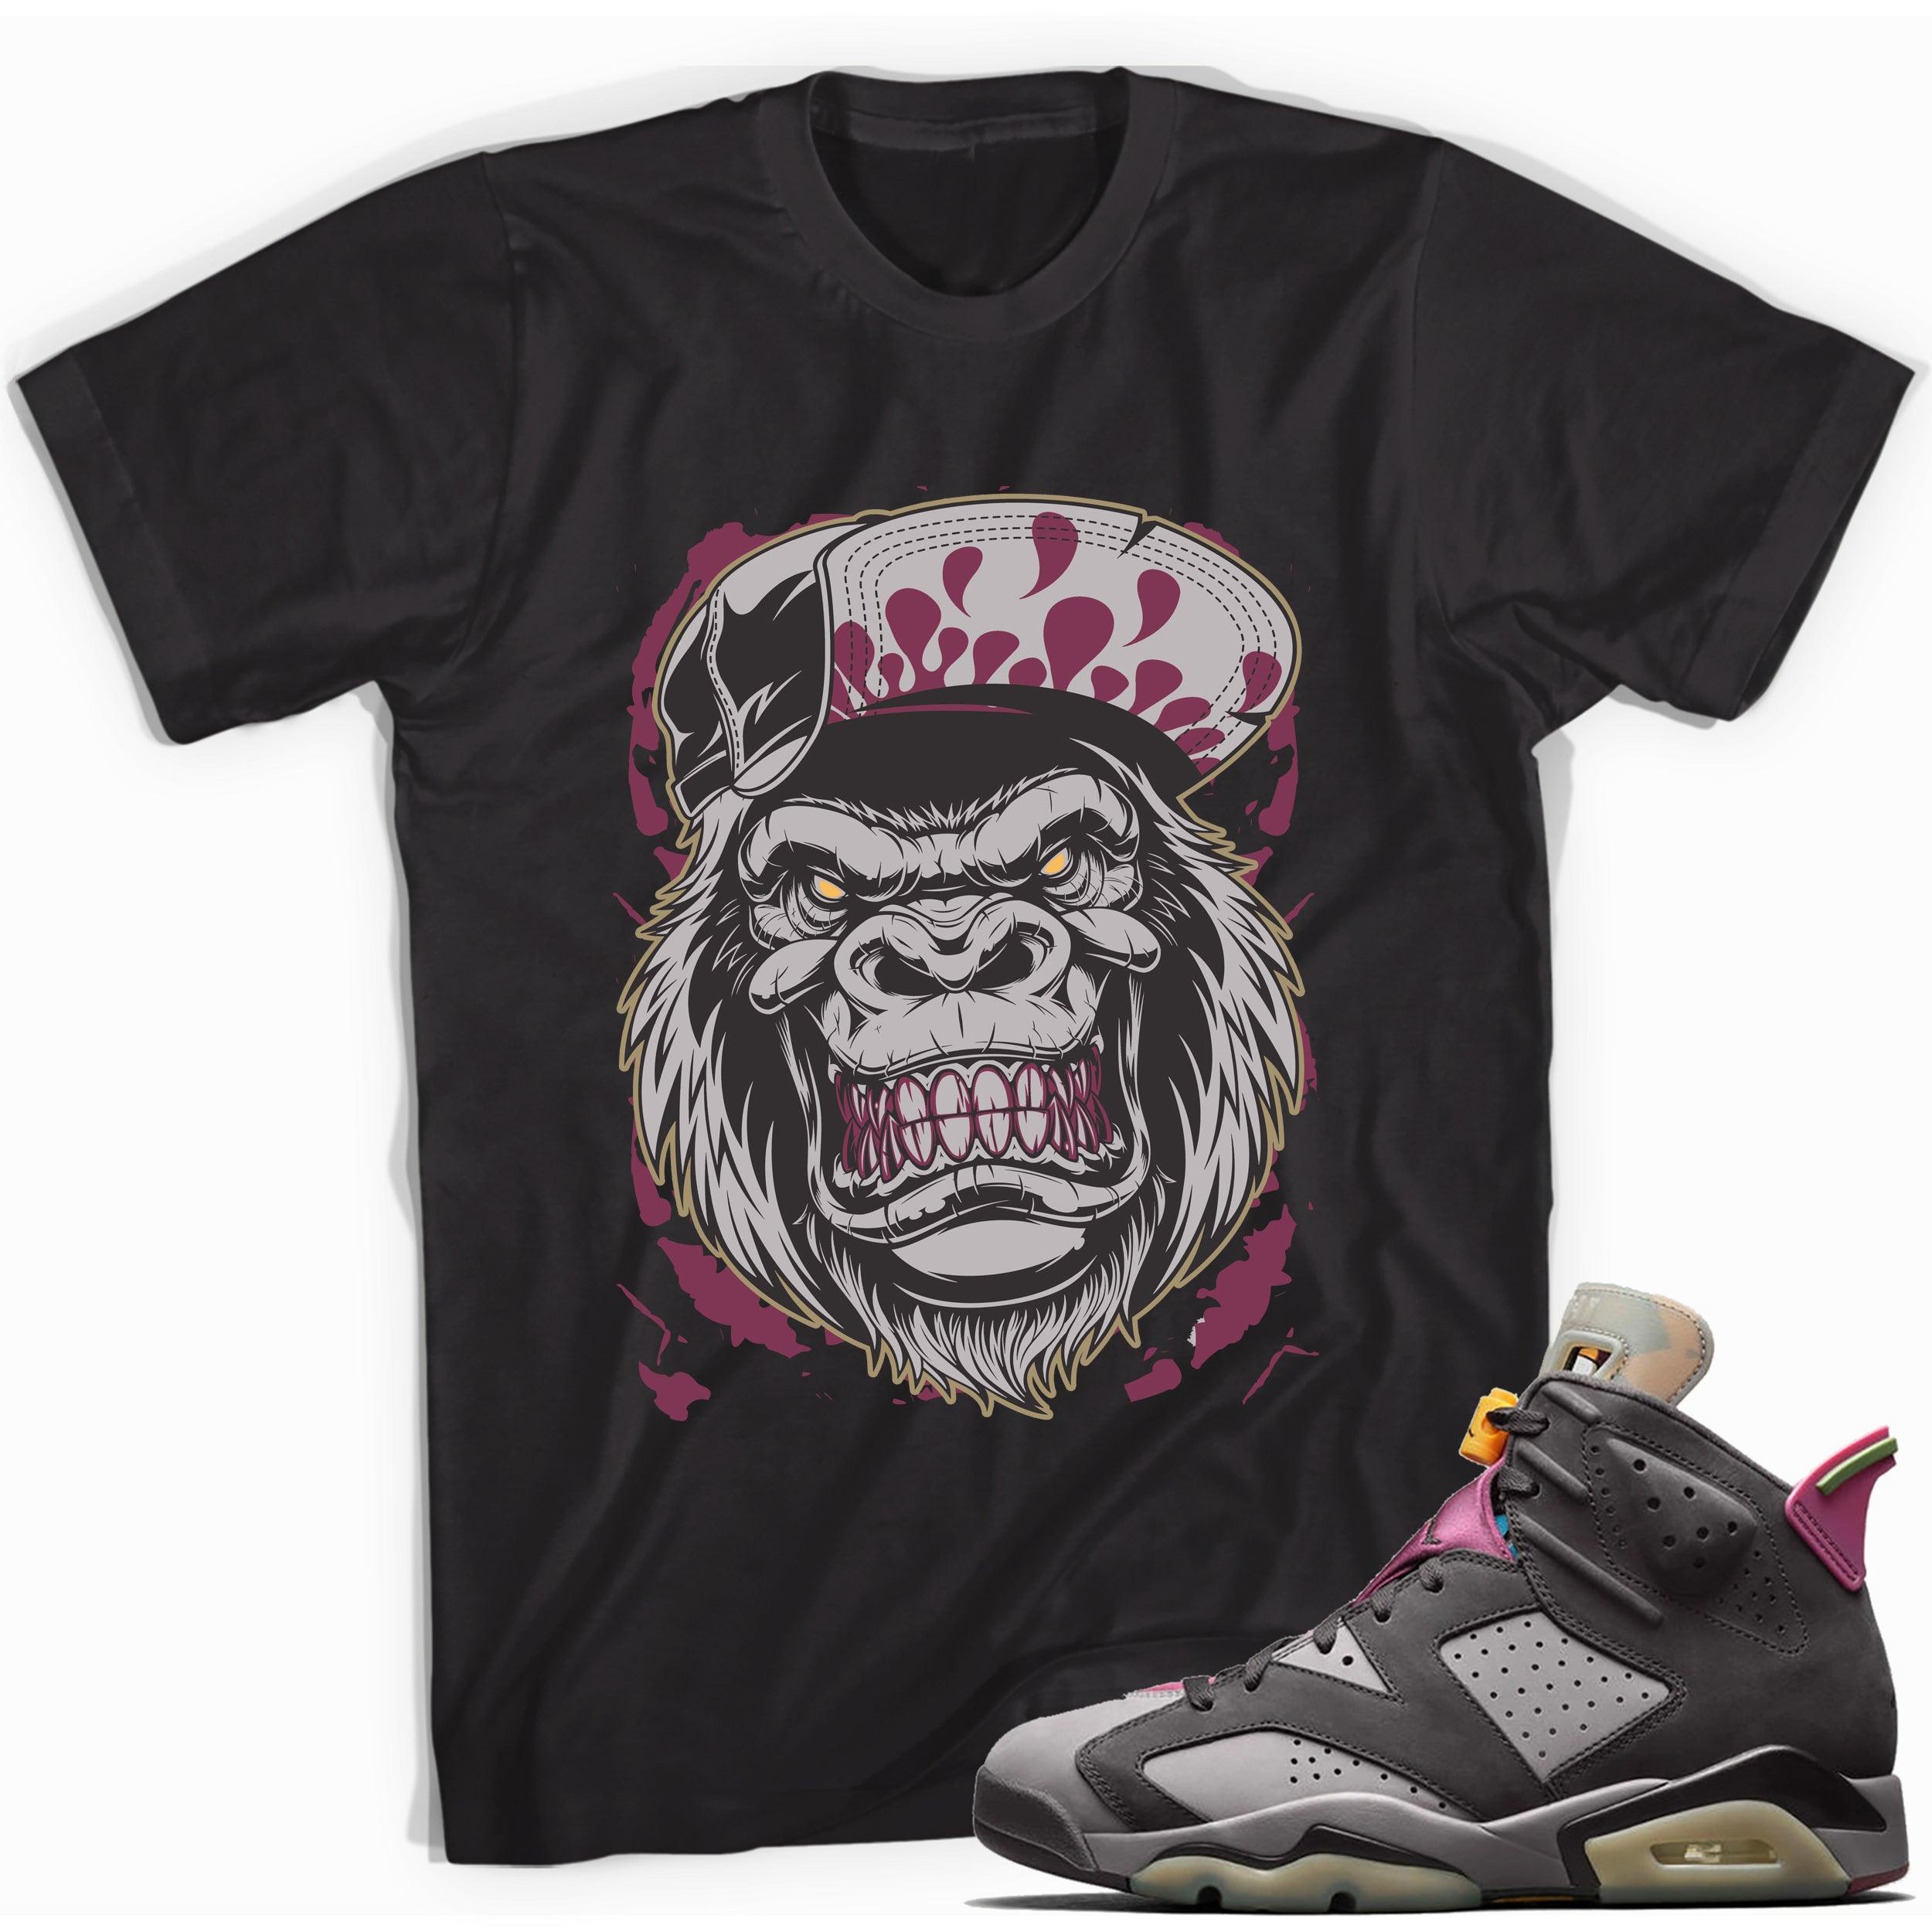 Black Gorilla Beast Shirt Jordan 6s Bordeaux photo